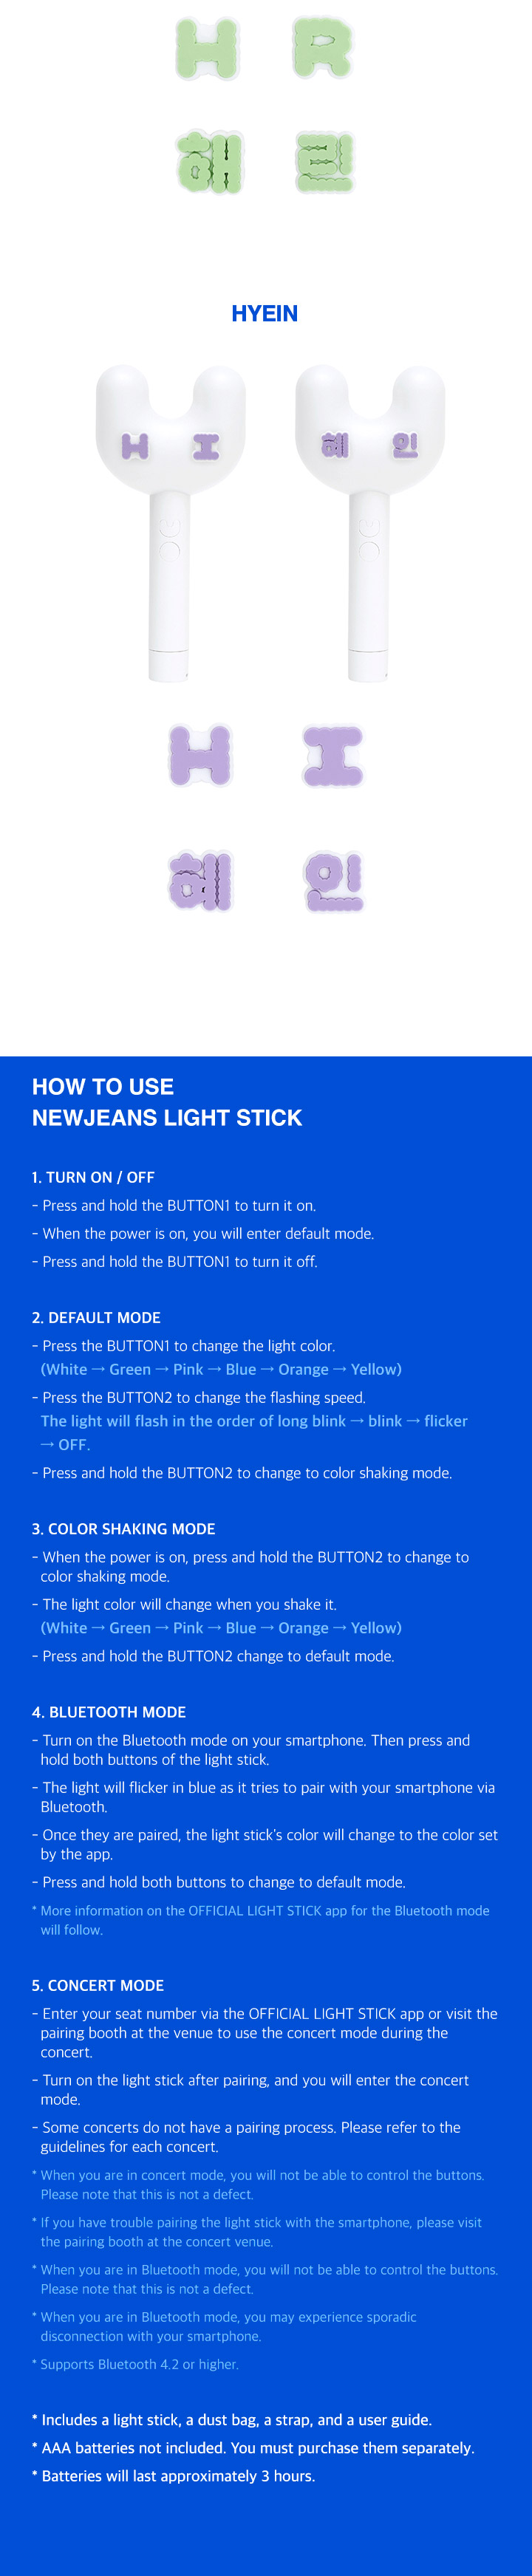 NewJeans - Official Light Stick